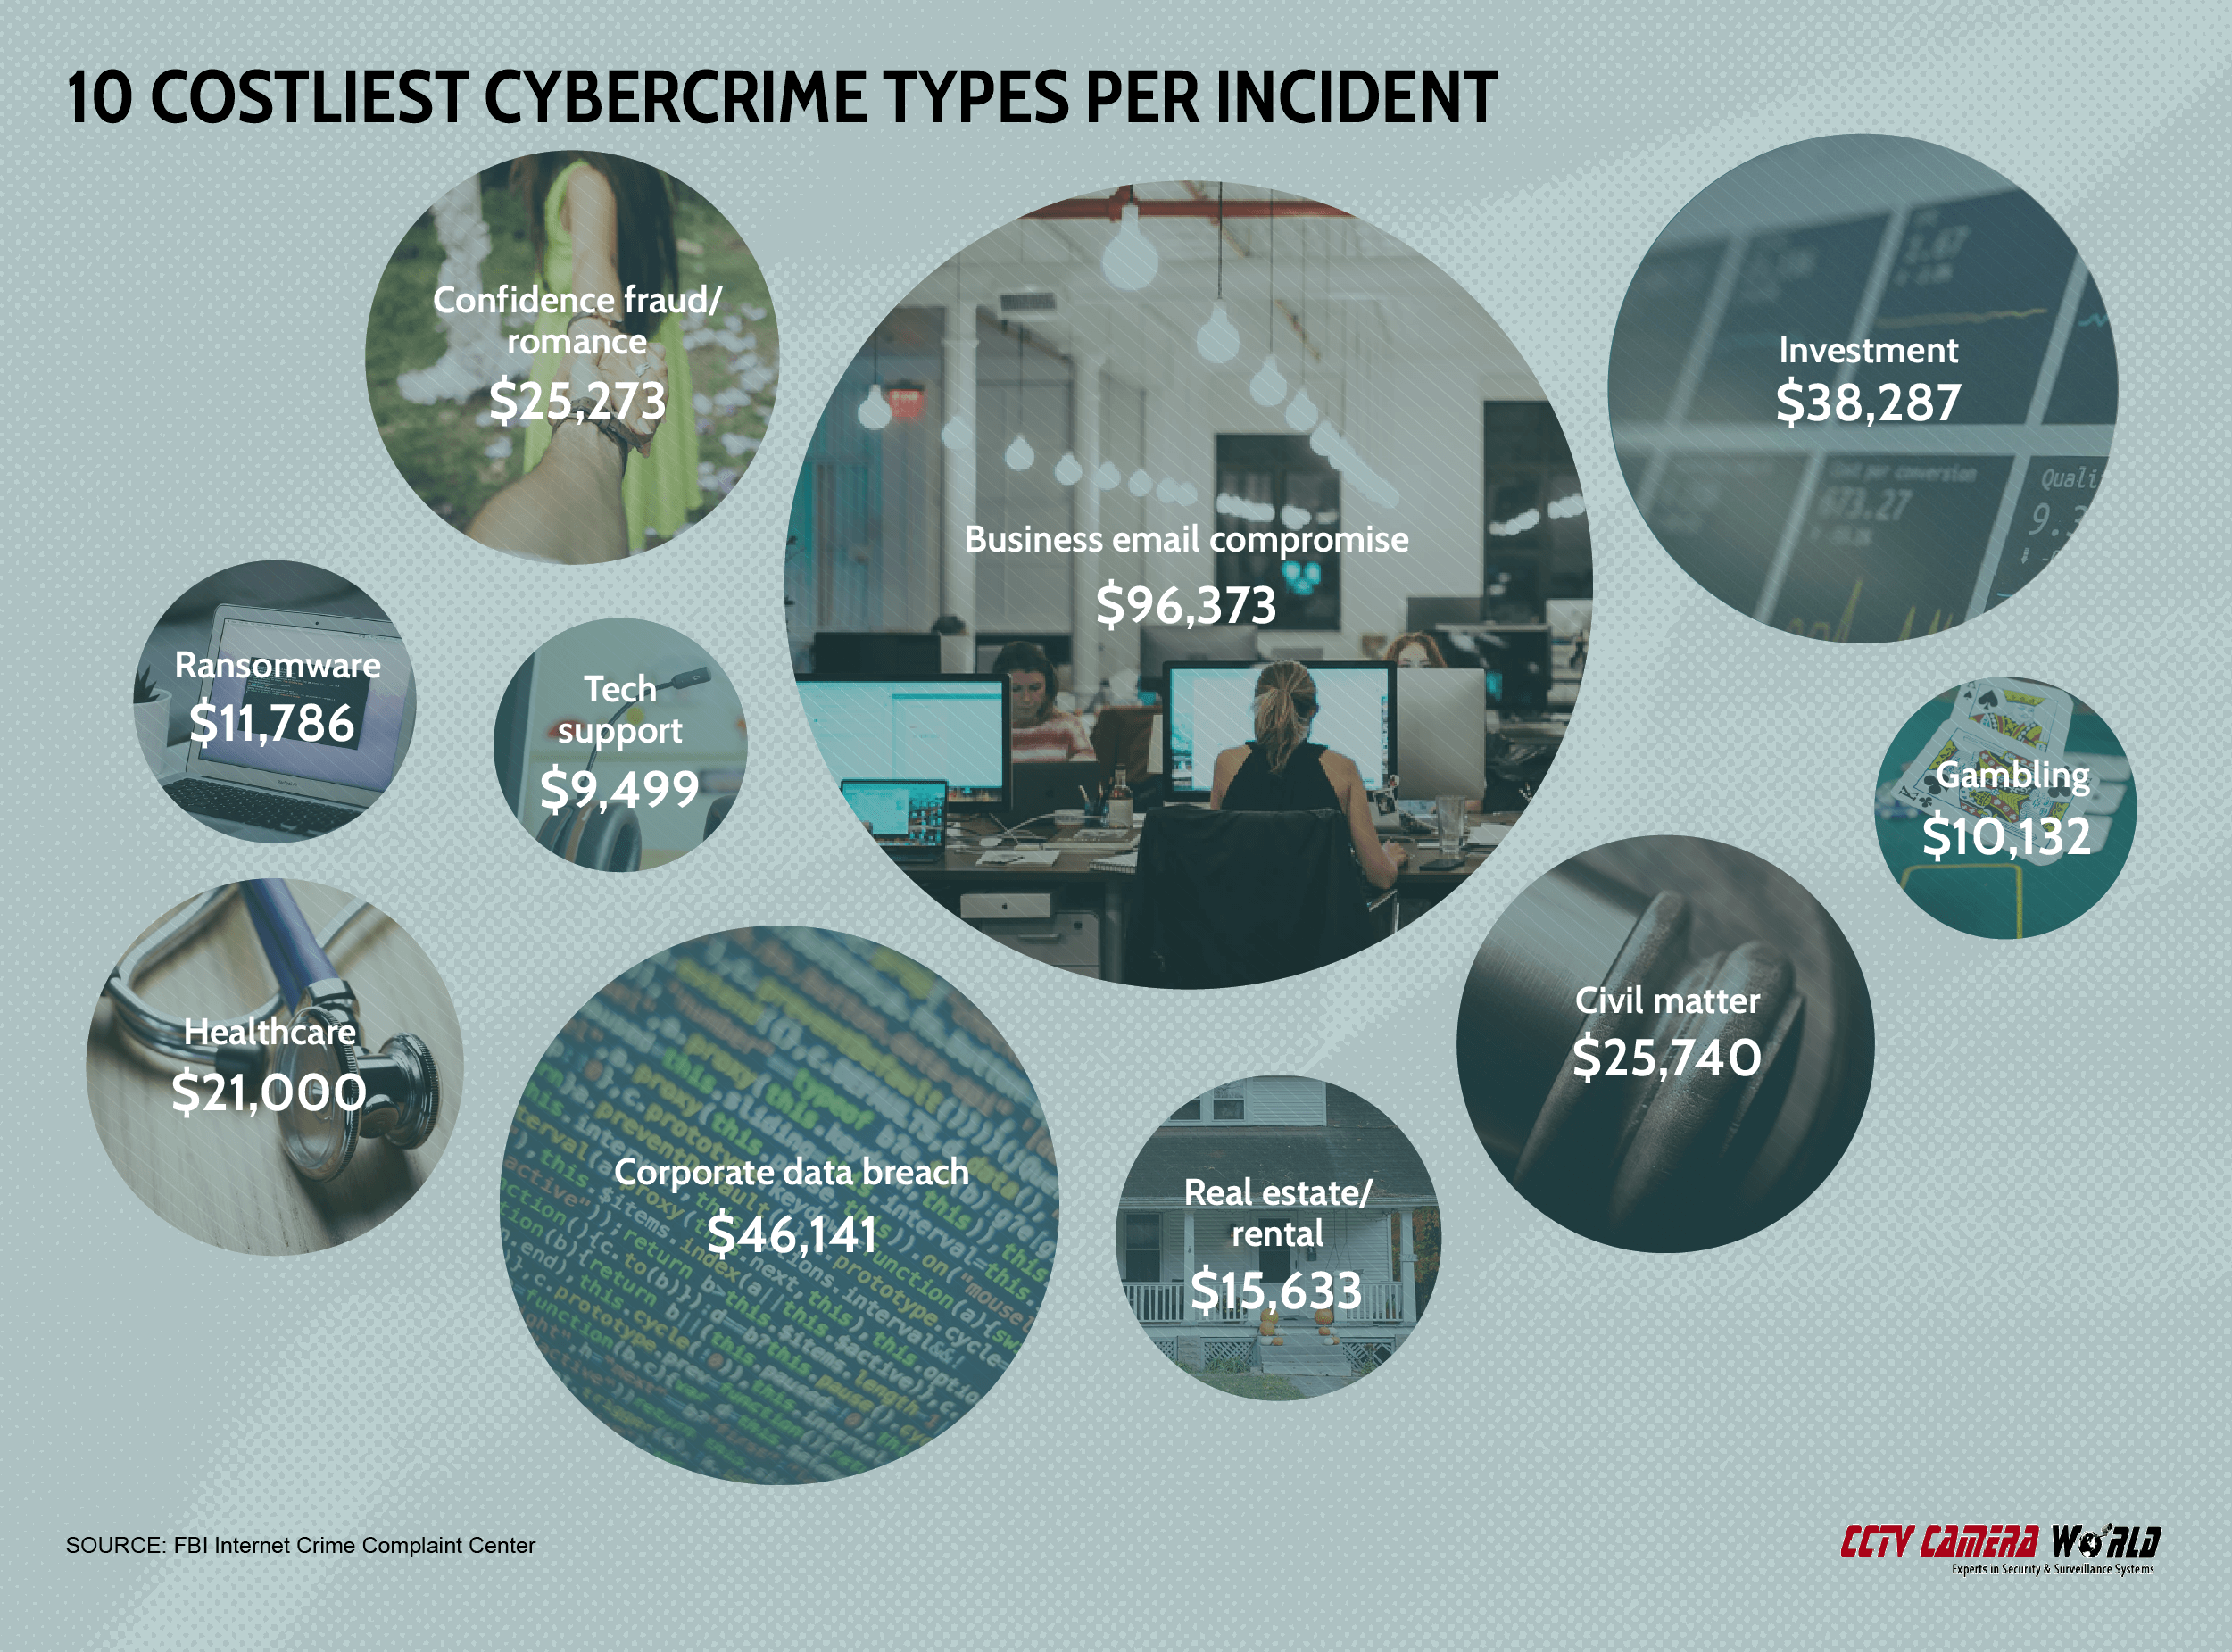 10 costliest cybercrime types per incident